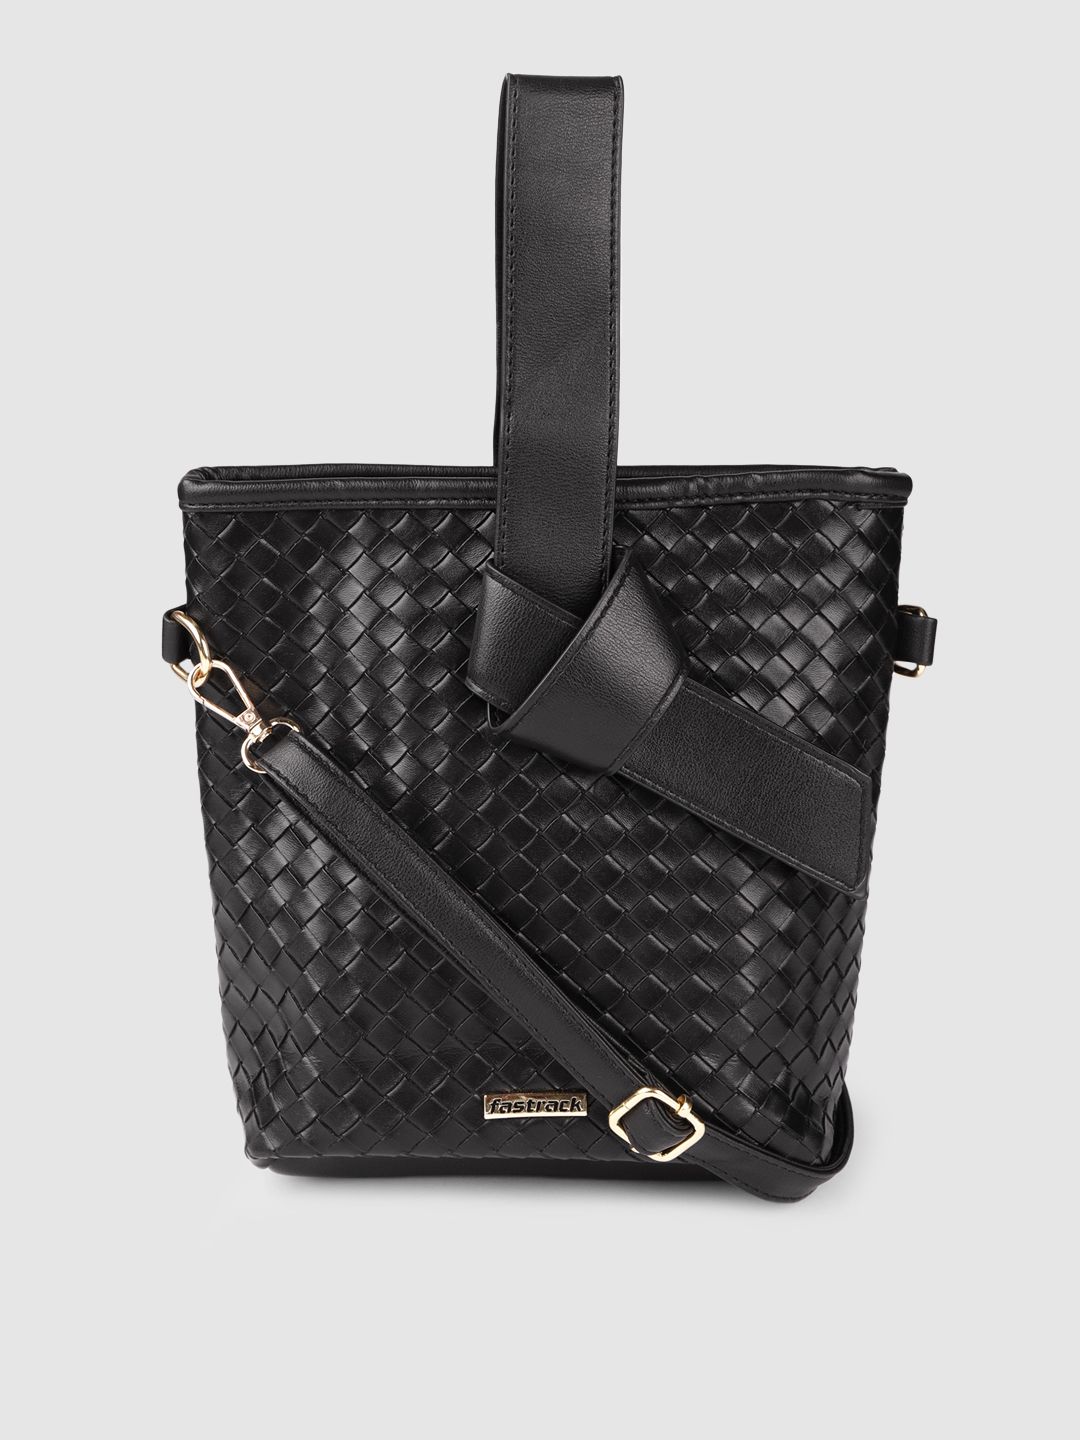 Fastrack Black Geometric Textured Bucket Handheld Bag Price in India